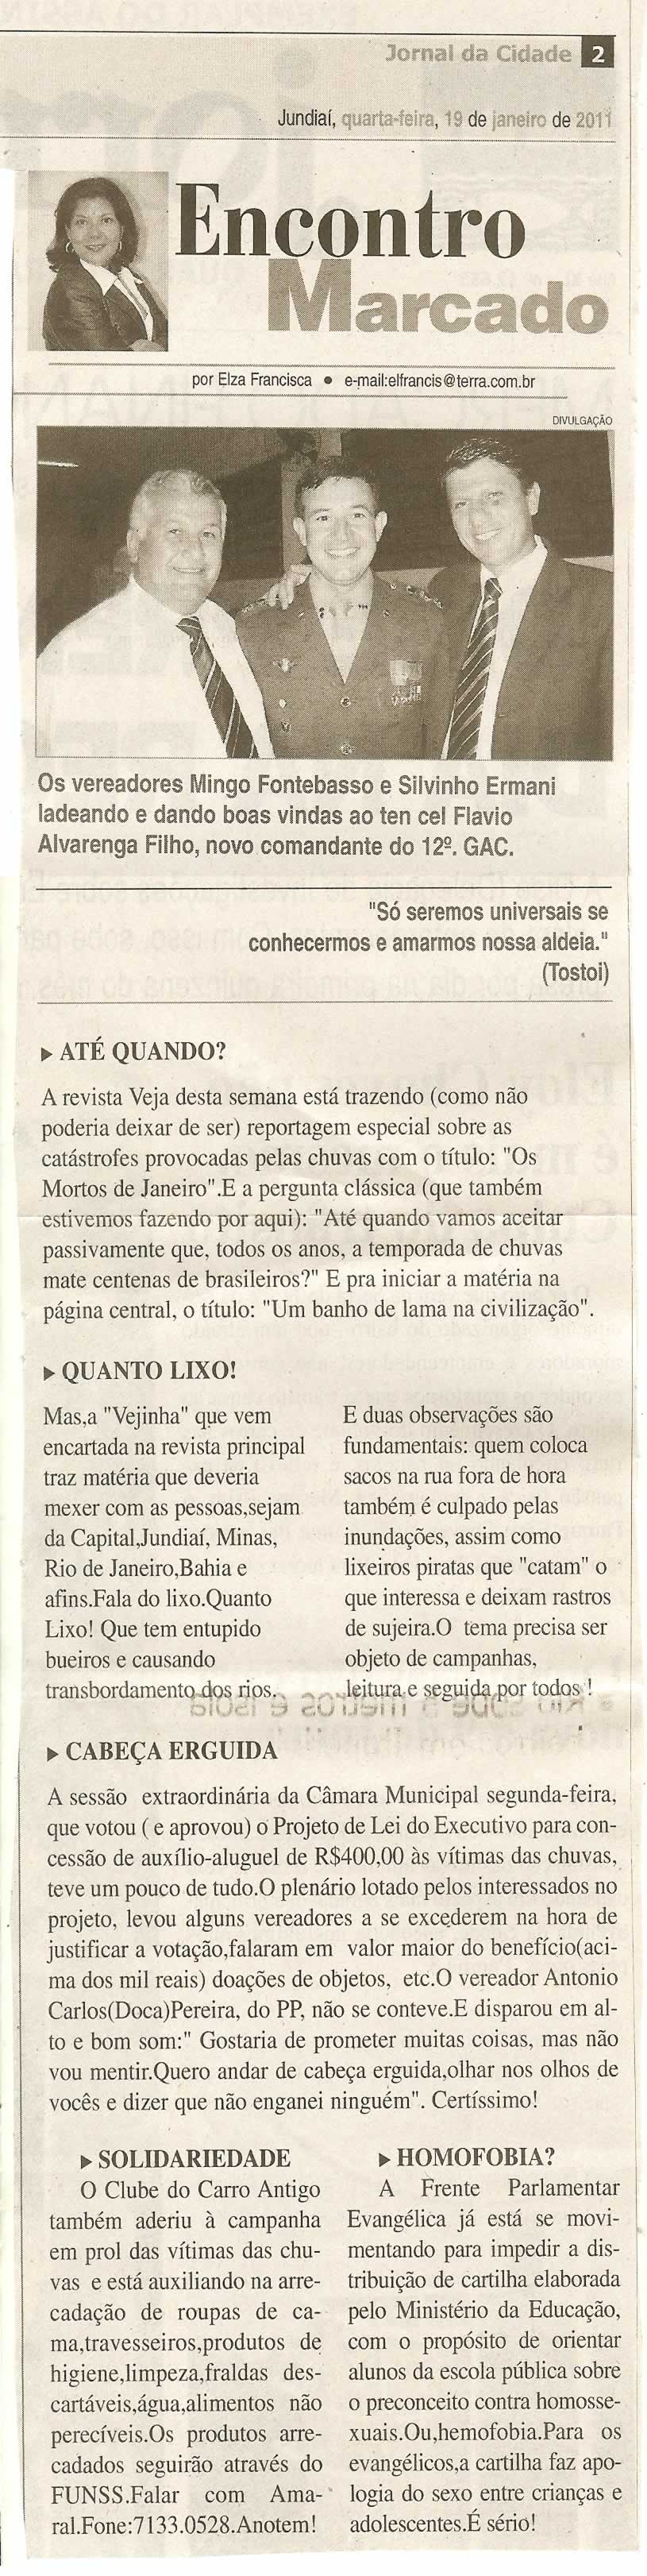 Jornal da Cidade - 19/01/2011